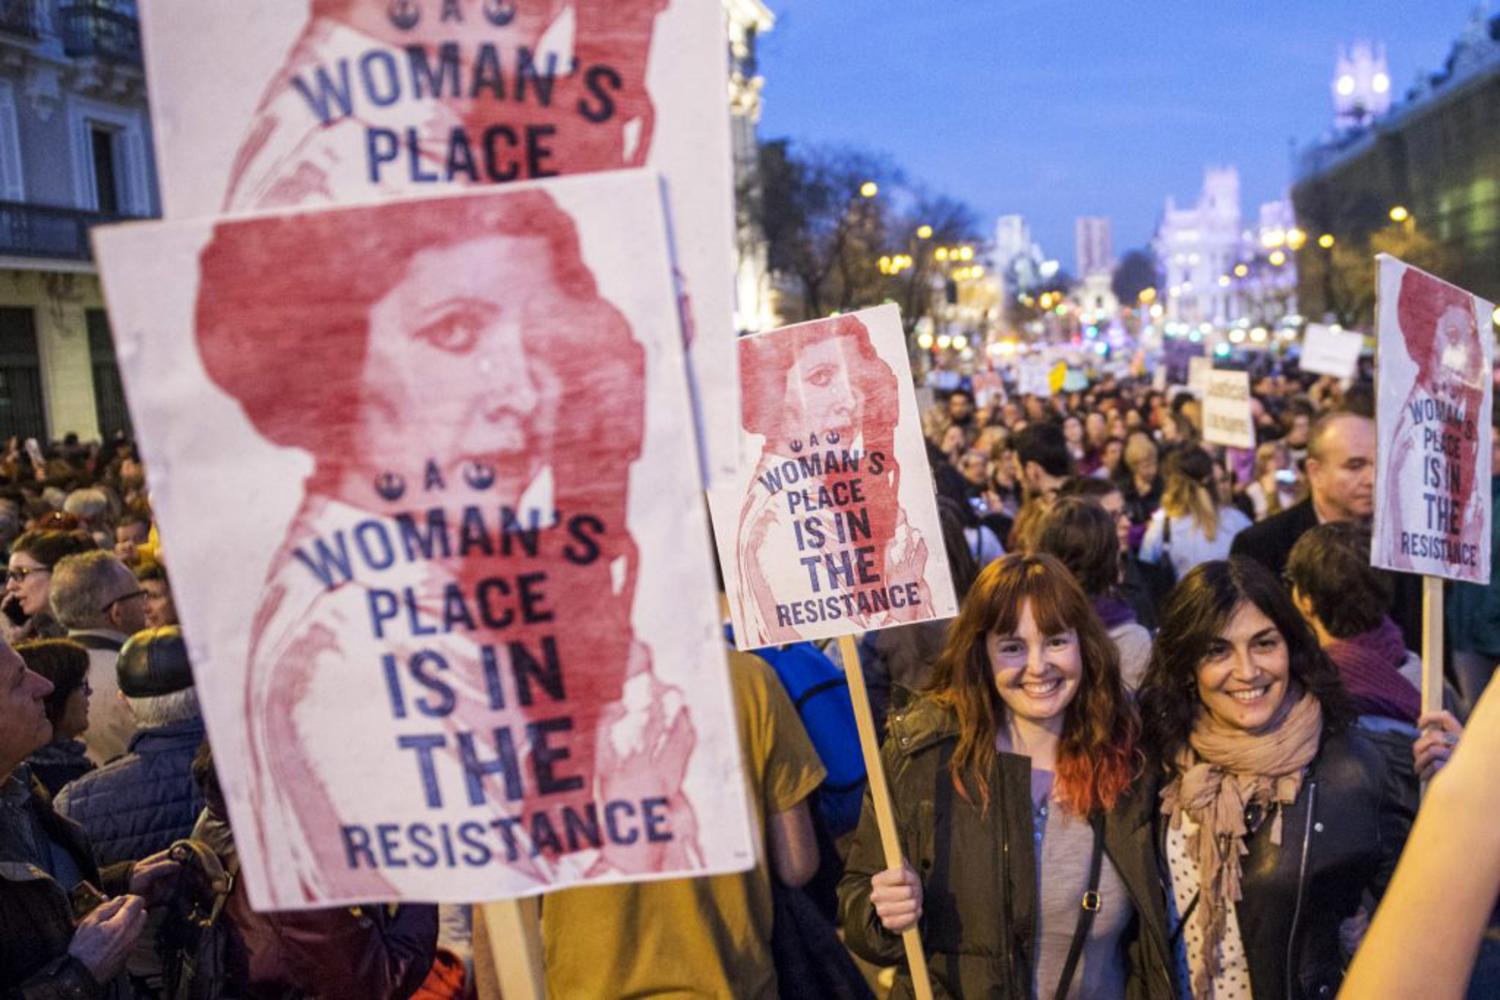 https://www.elsaltodiario.com/uploads/fotos/r1500/1ee1c6f0/feminismo_manifestacion.jpg?v=63680567044